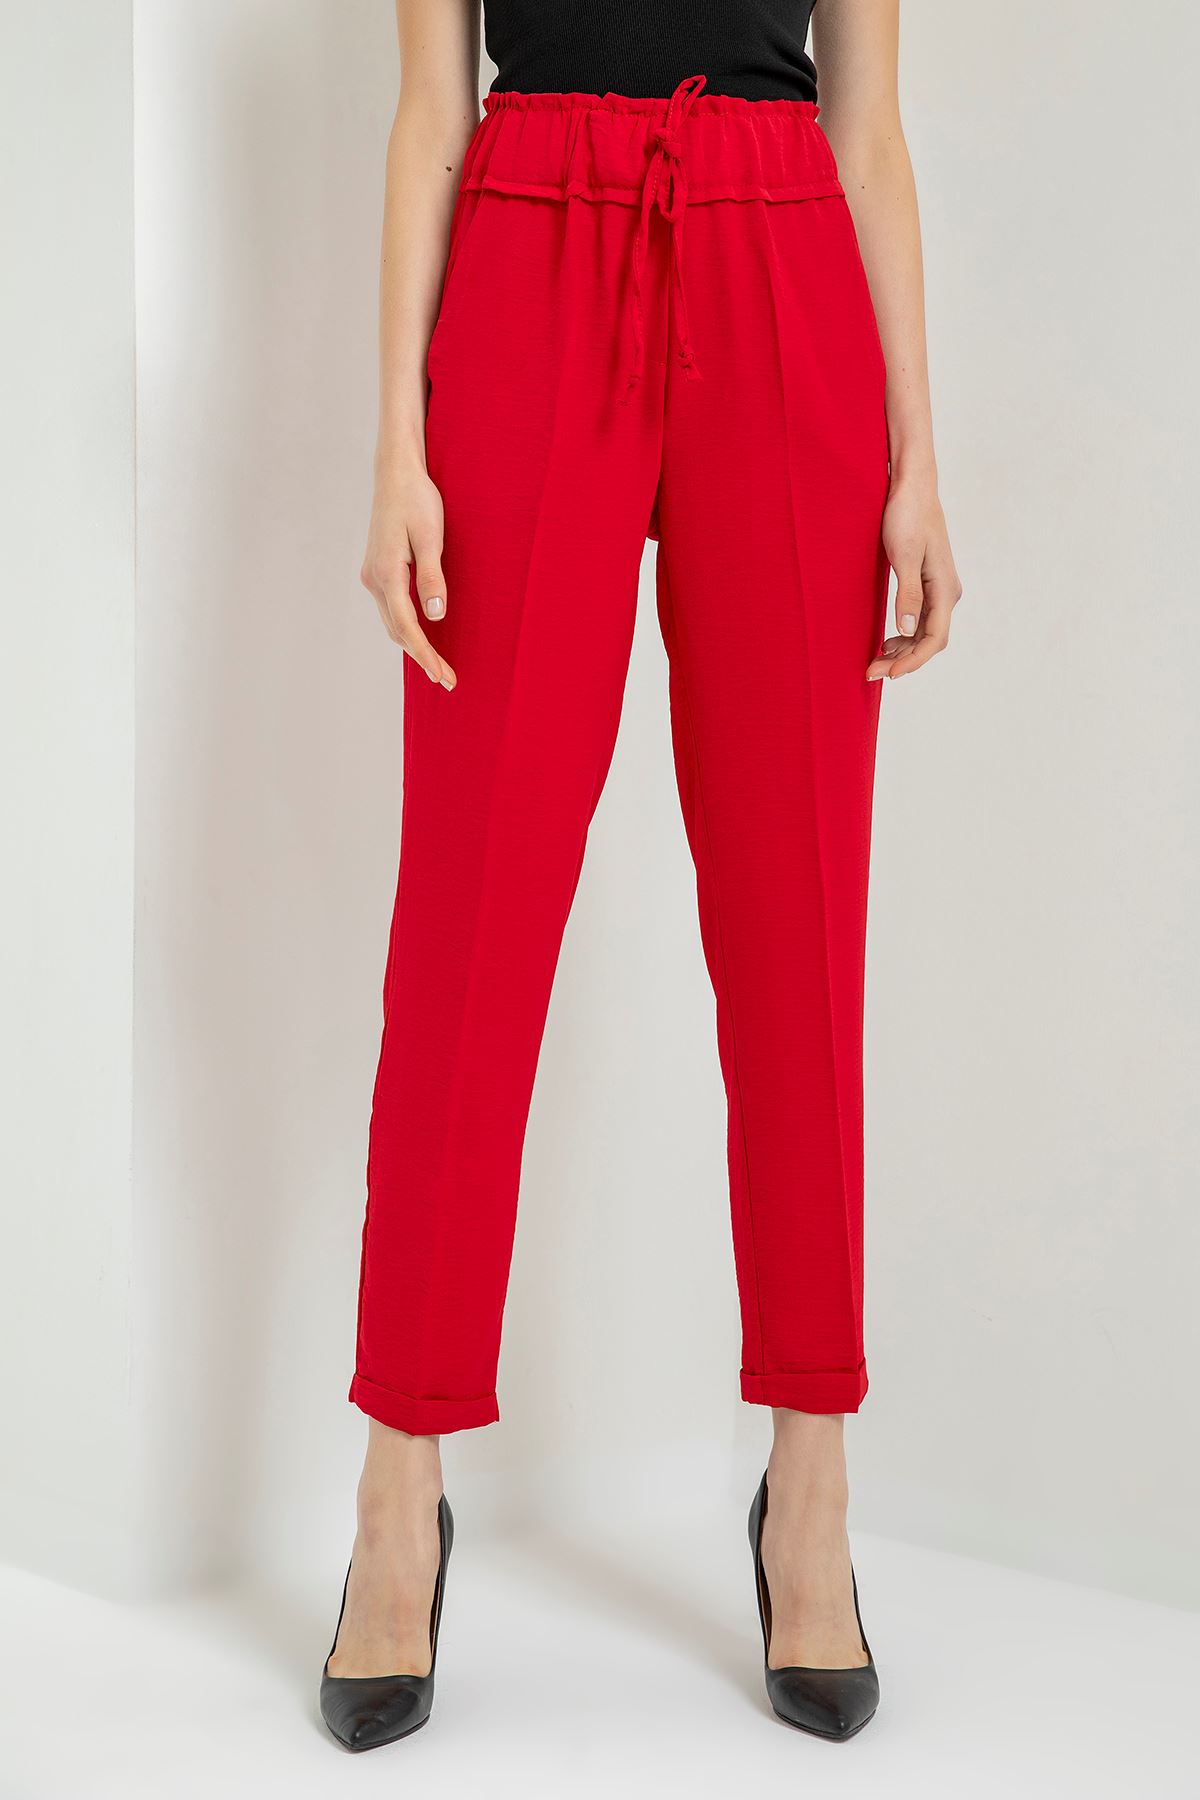 Linen Aerobin Fabric Ankle Length Wide Women'S Trouser - Red